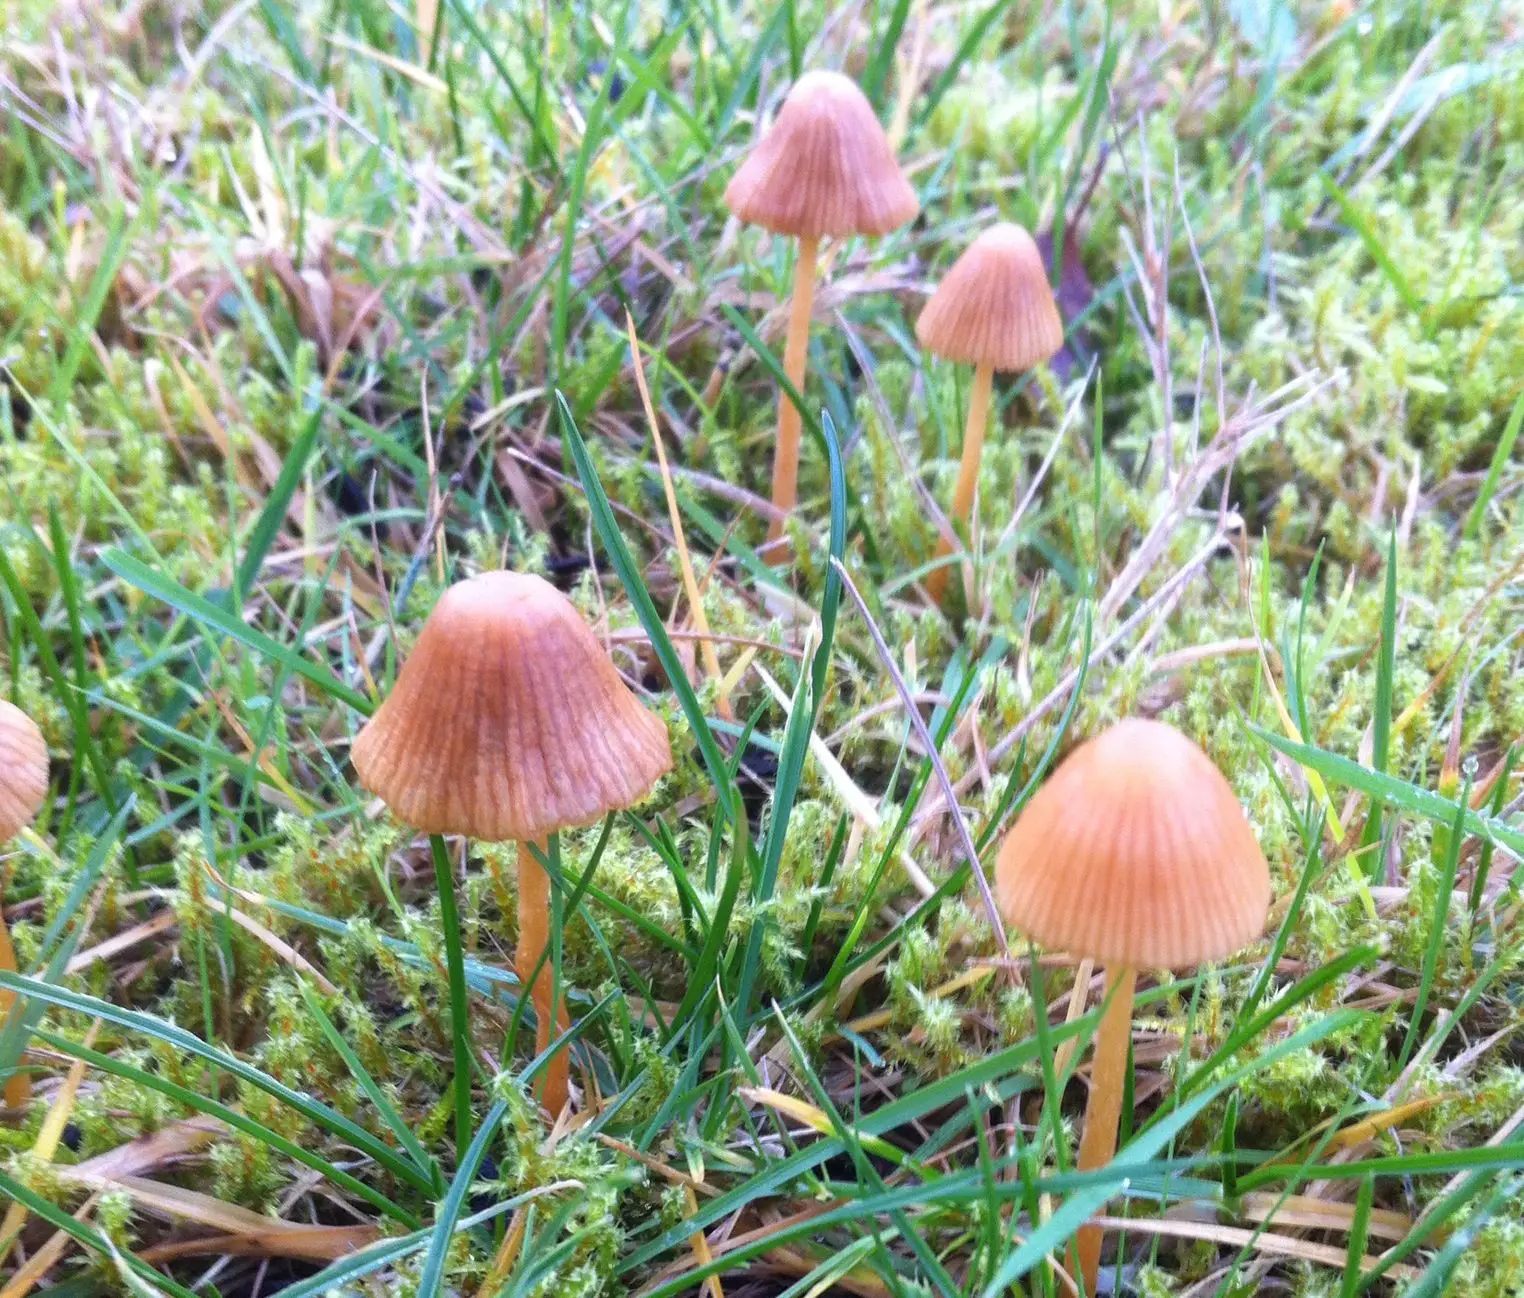 Little mushrooms in my yard.